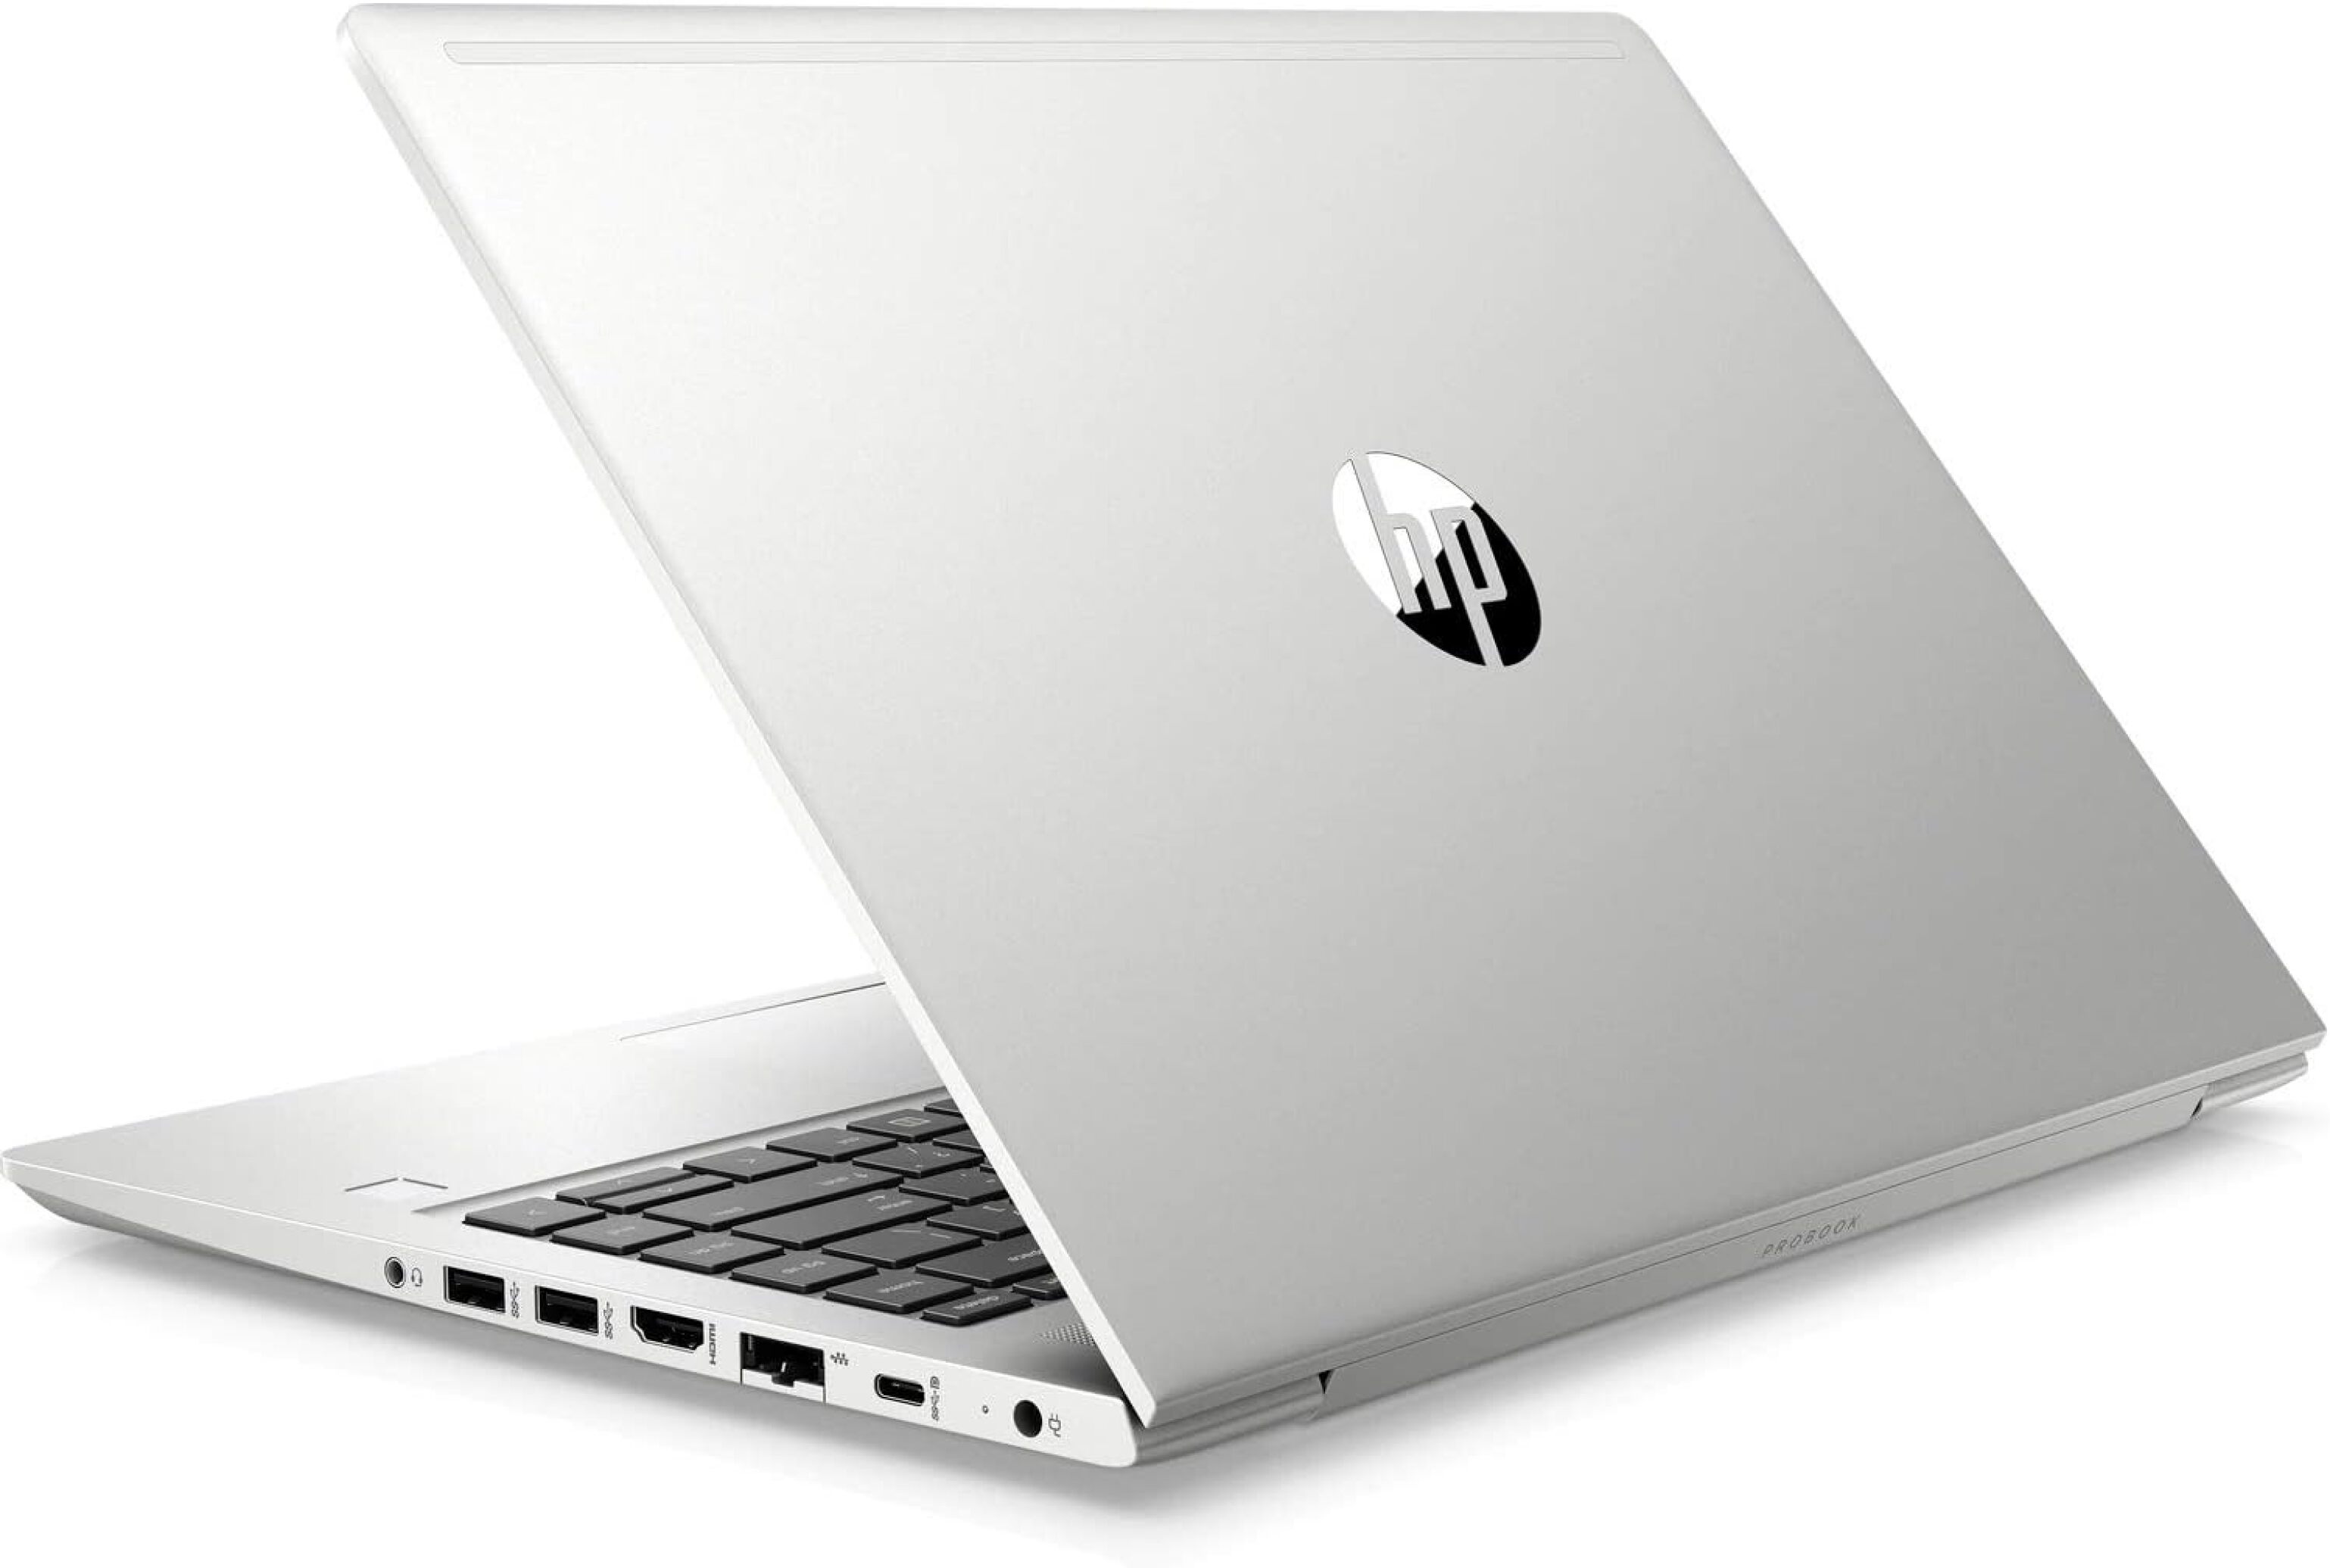  قیمت لپ تاپ HP ProBook 440 G7 i5 10210U | لاکچری لپ تاپ 